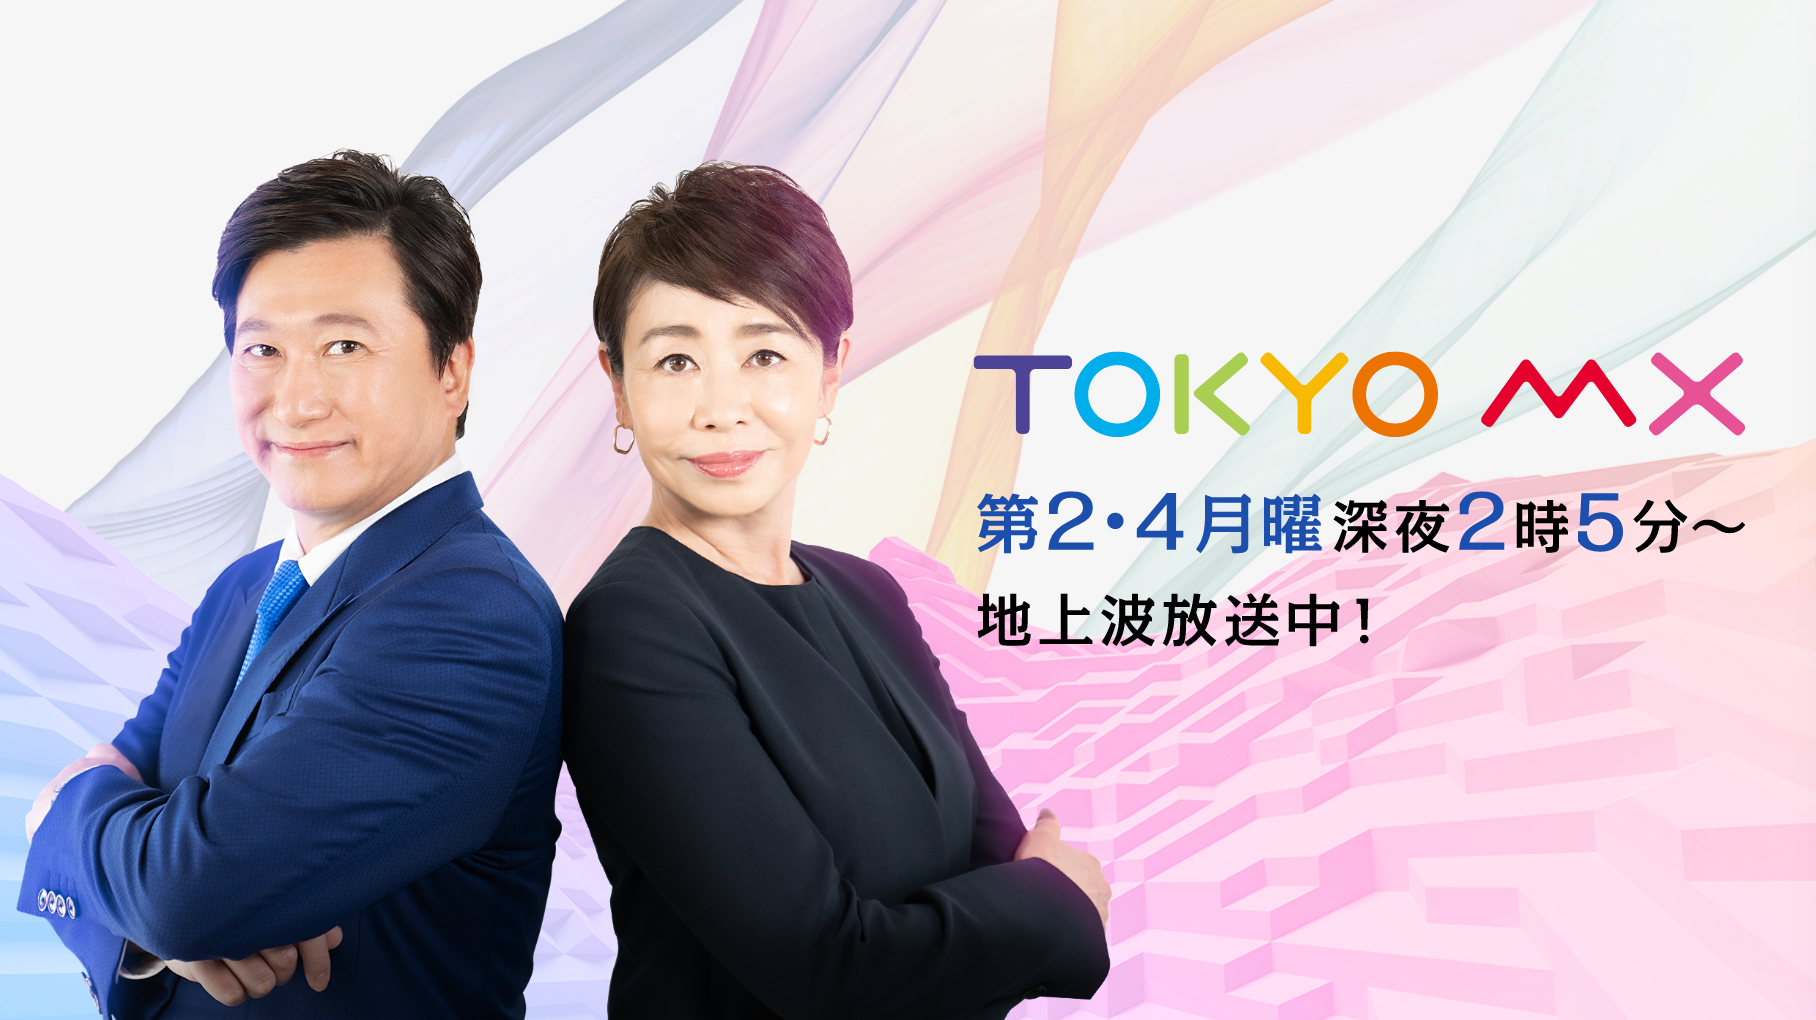 TOKYO MX 隔週水曜深夜2時5分〜 地上波放送中！